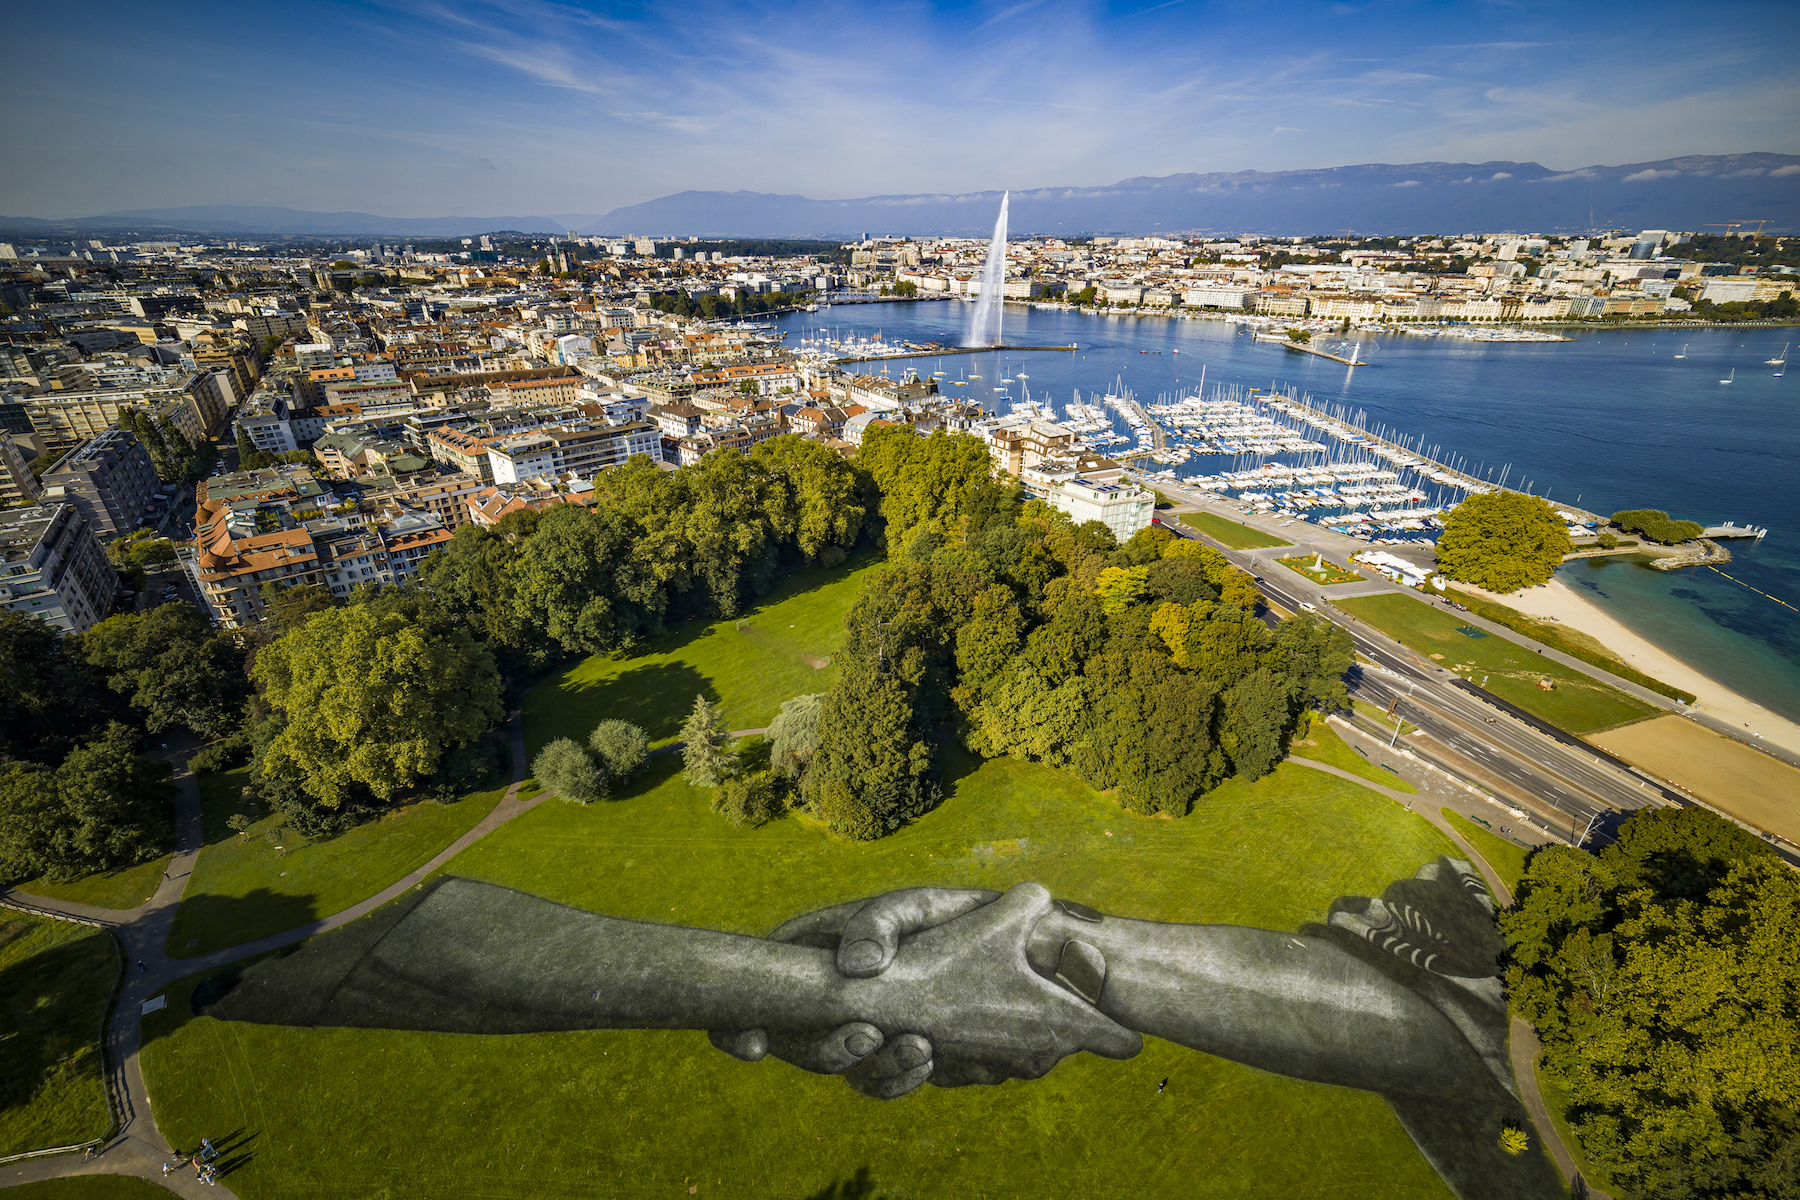 Artist Saype’s Worldwide Symbolic Human Chain extends to Geneva, 2019